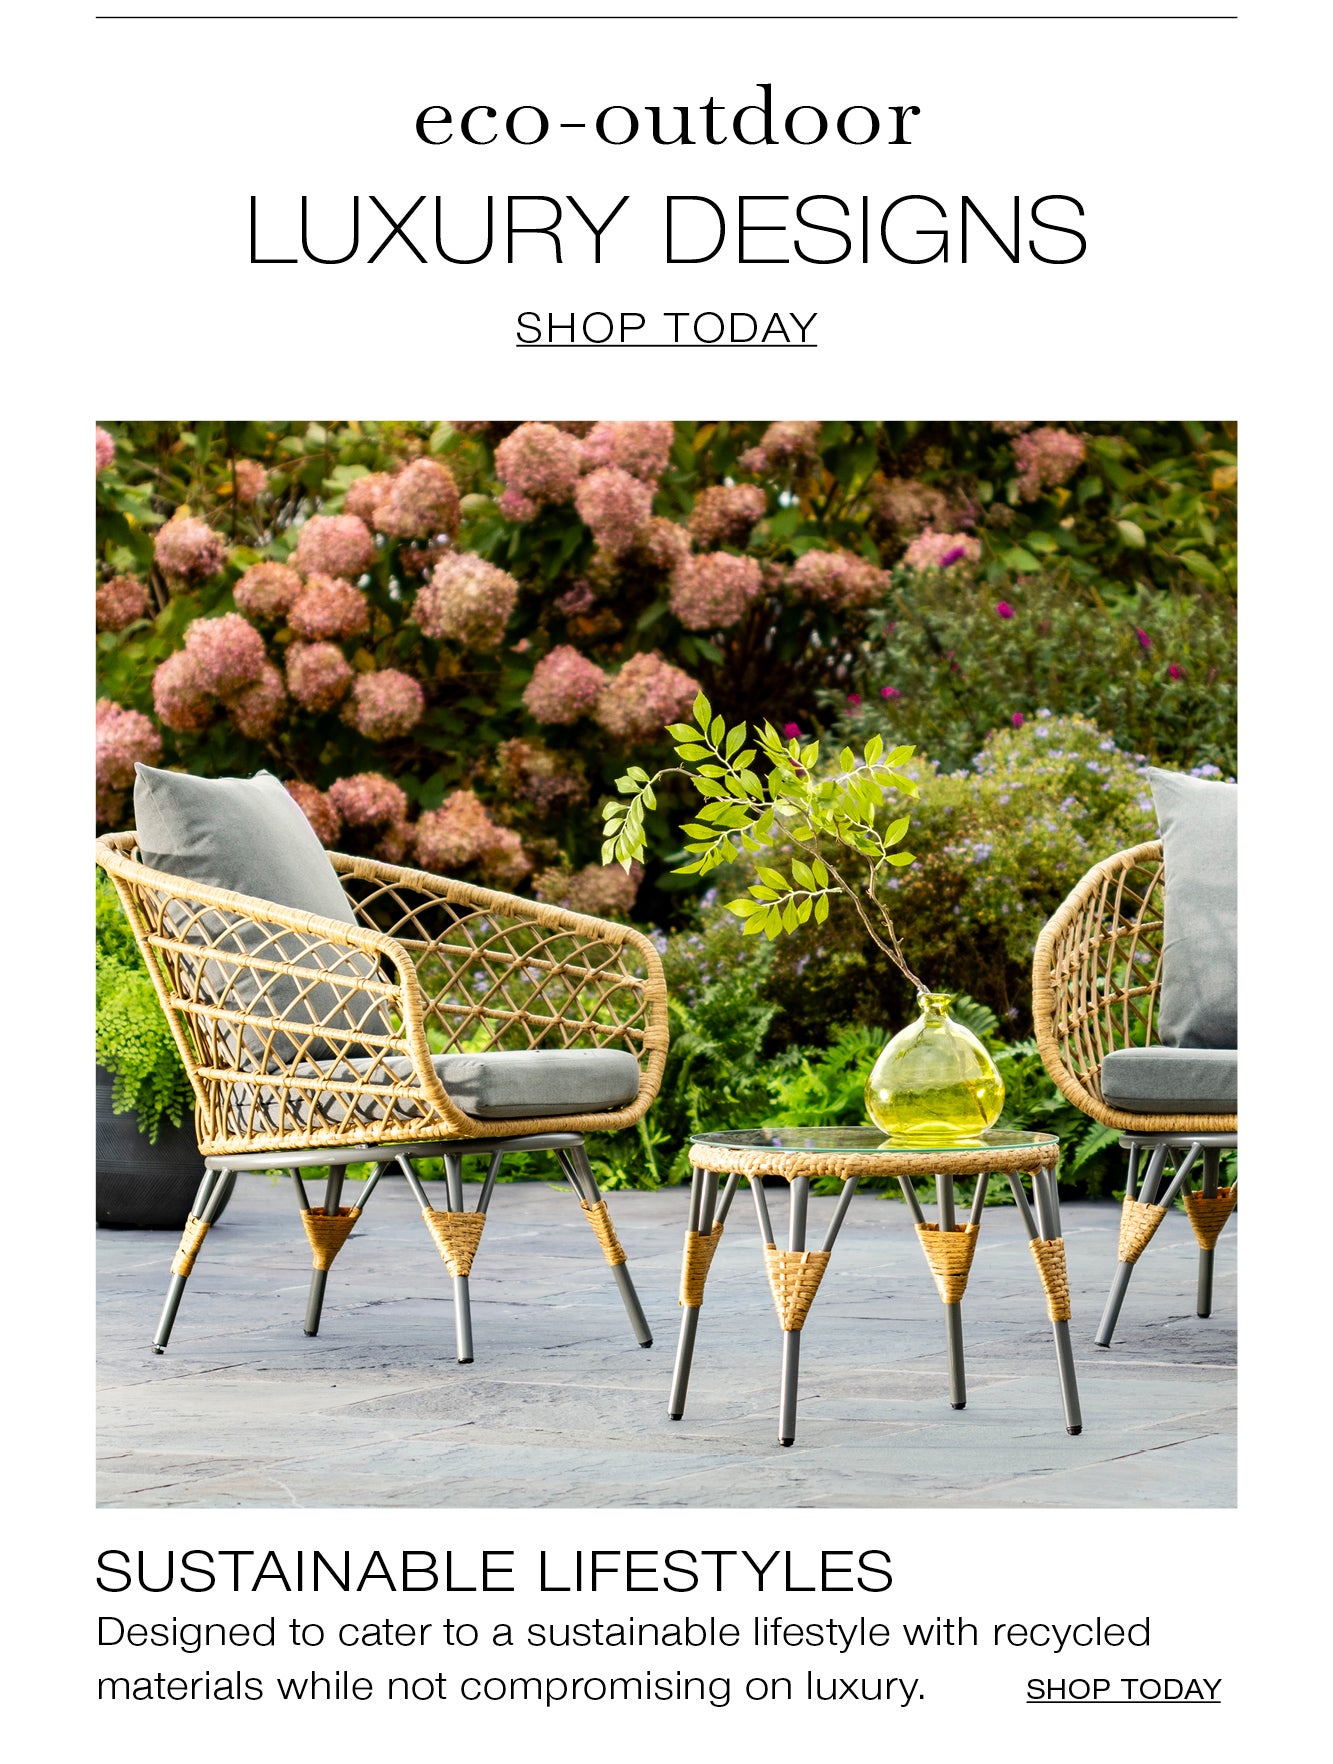 eco-outdoor luxury designs